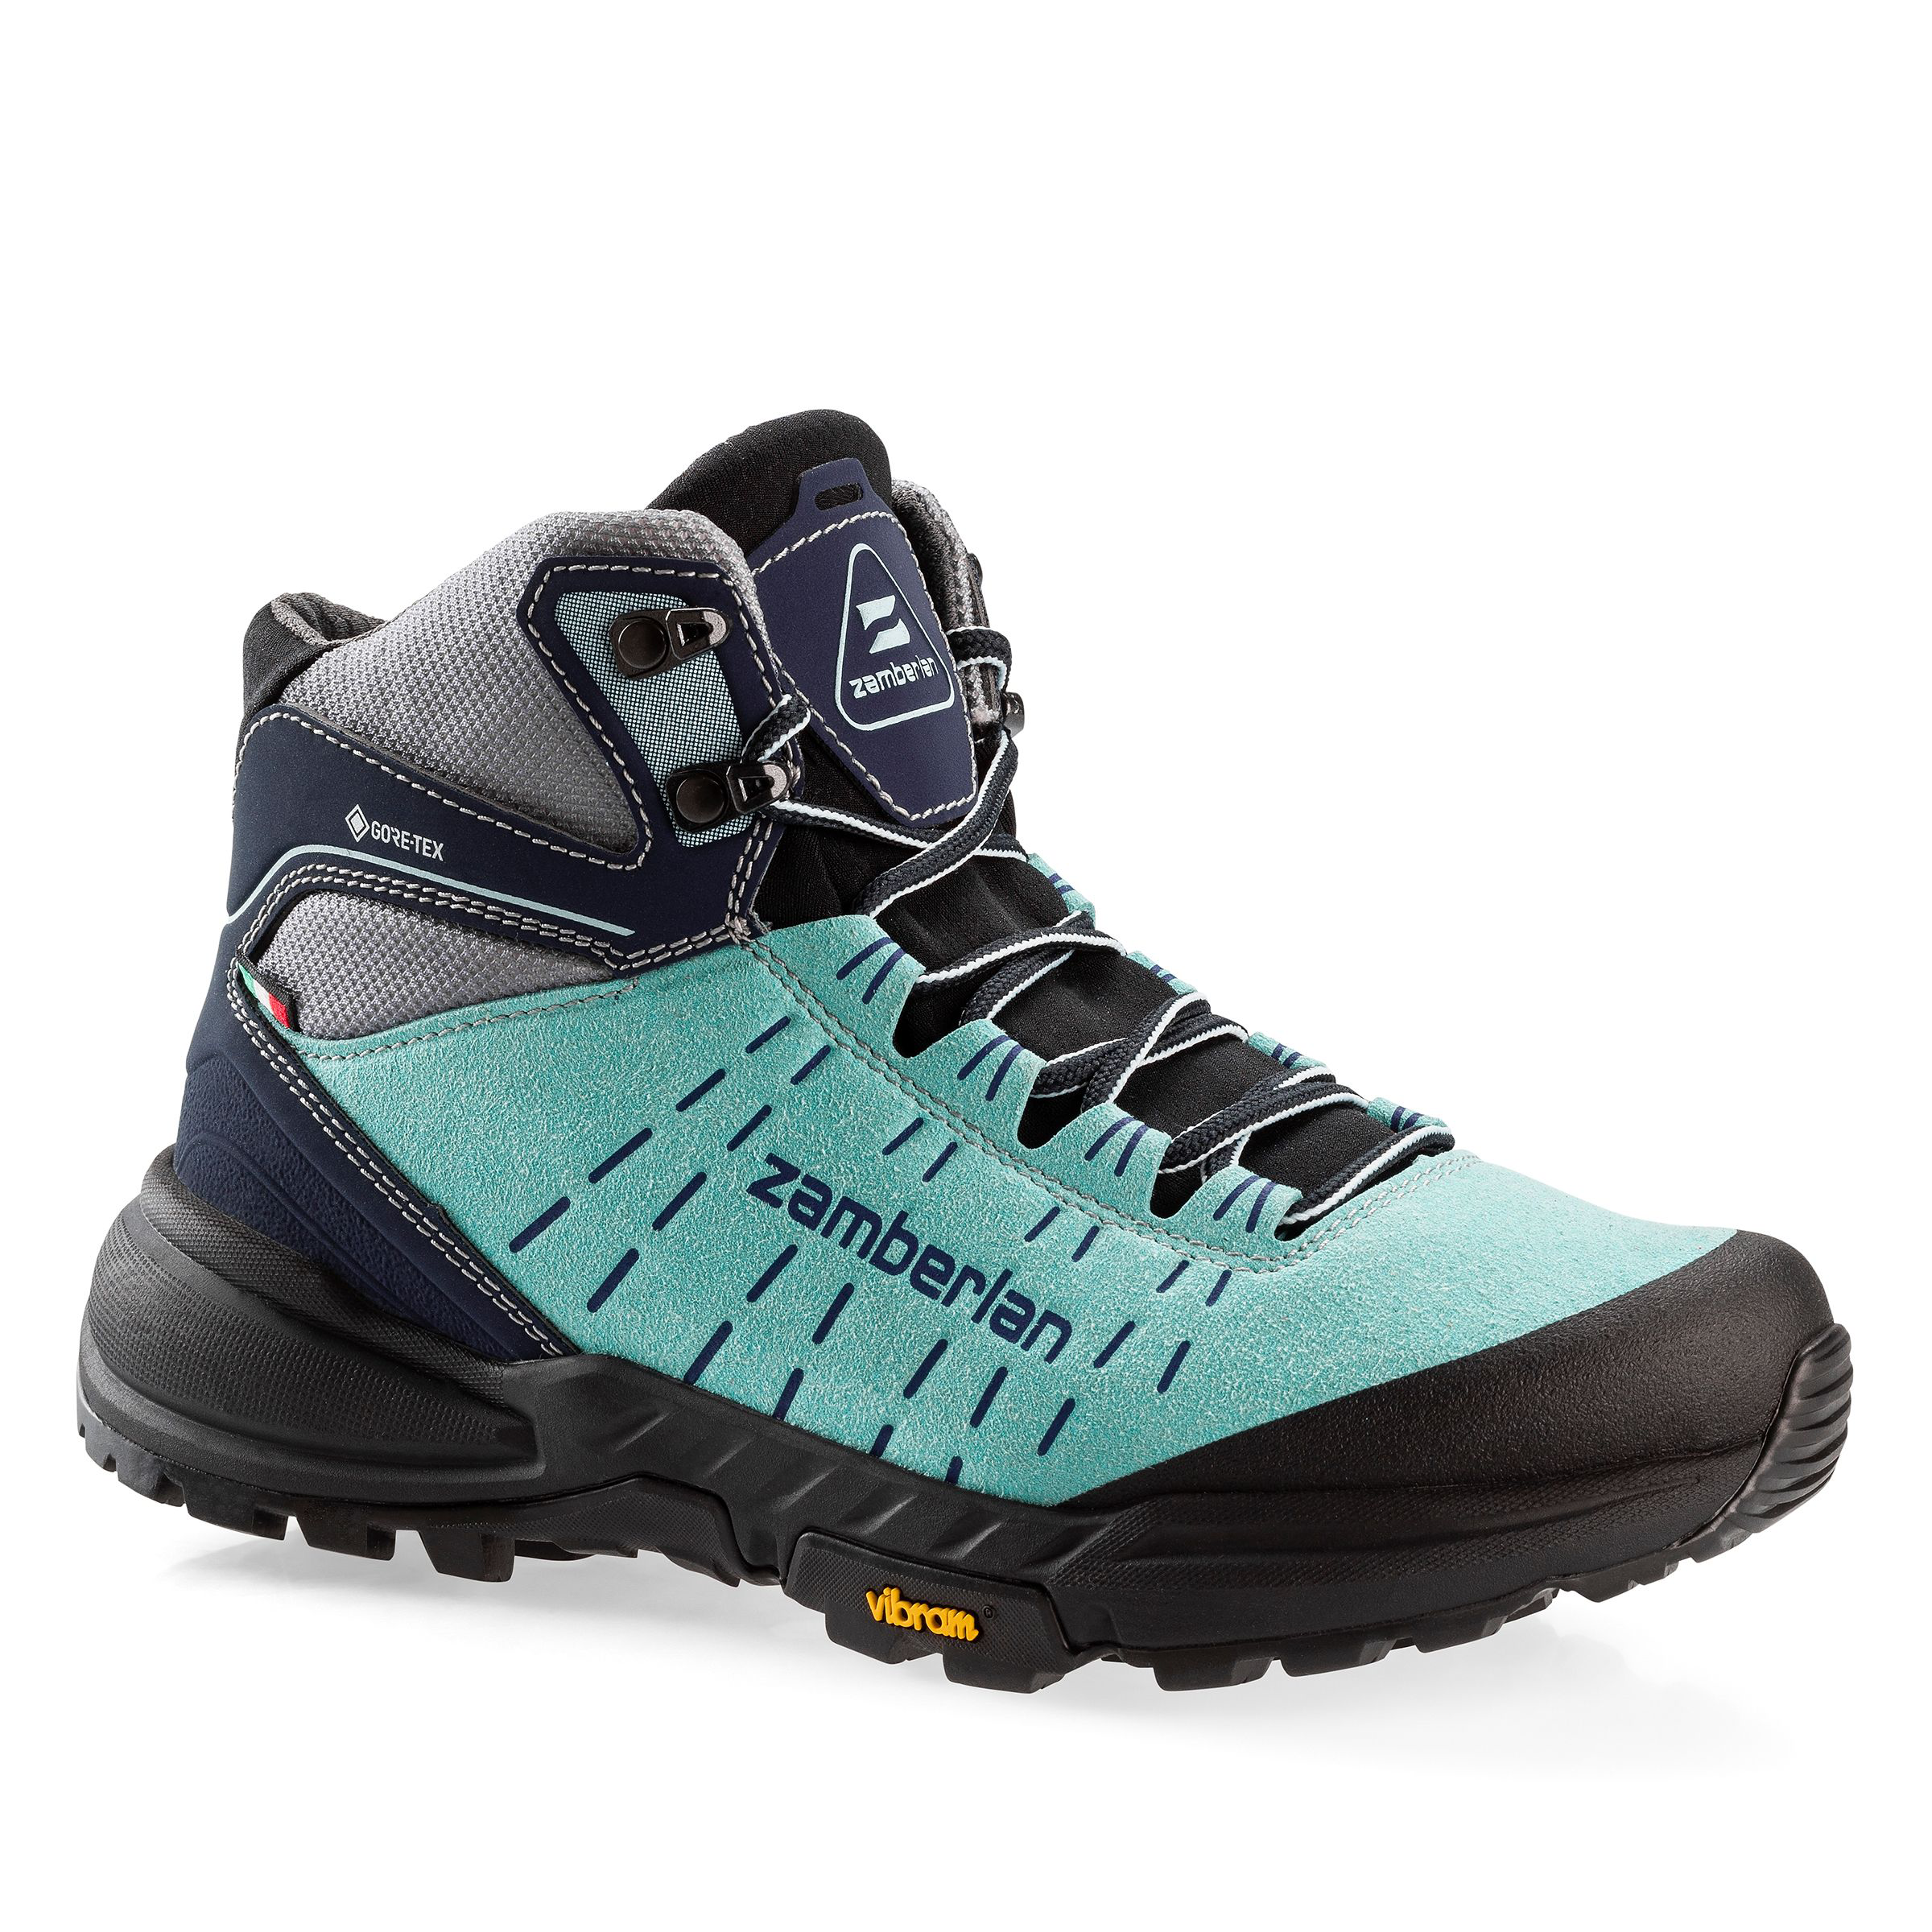 Zamberlan 334 Circe GTX Waterproof Hiking Boots for Ladies - Blue - 7.5M